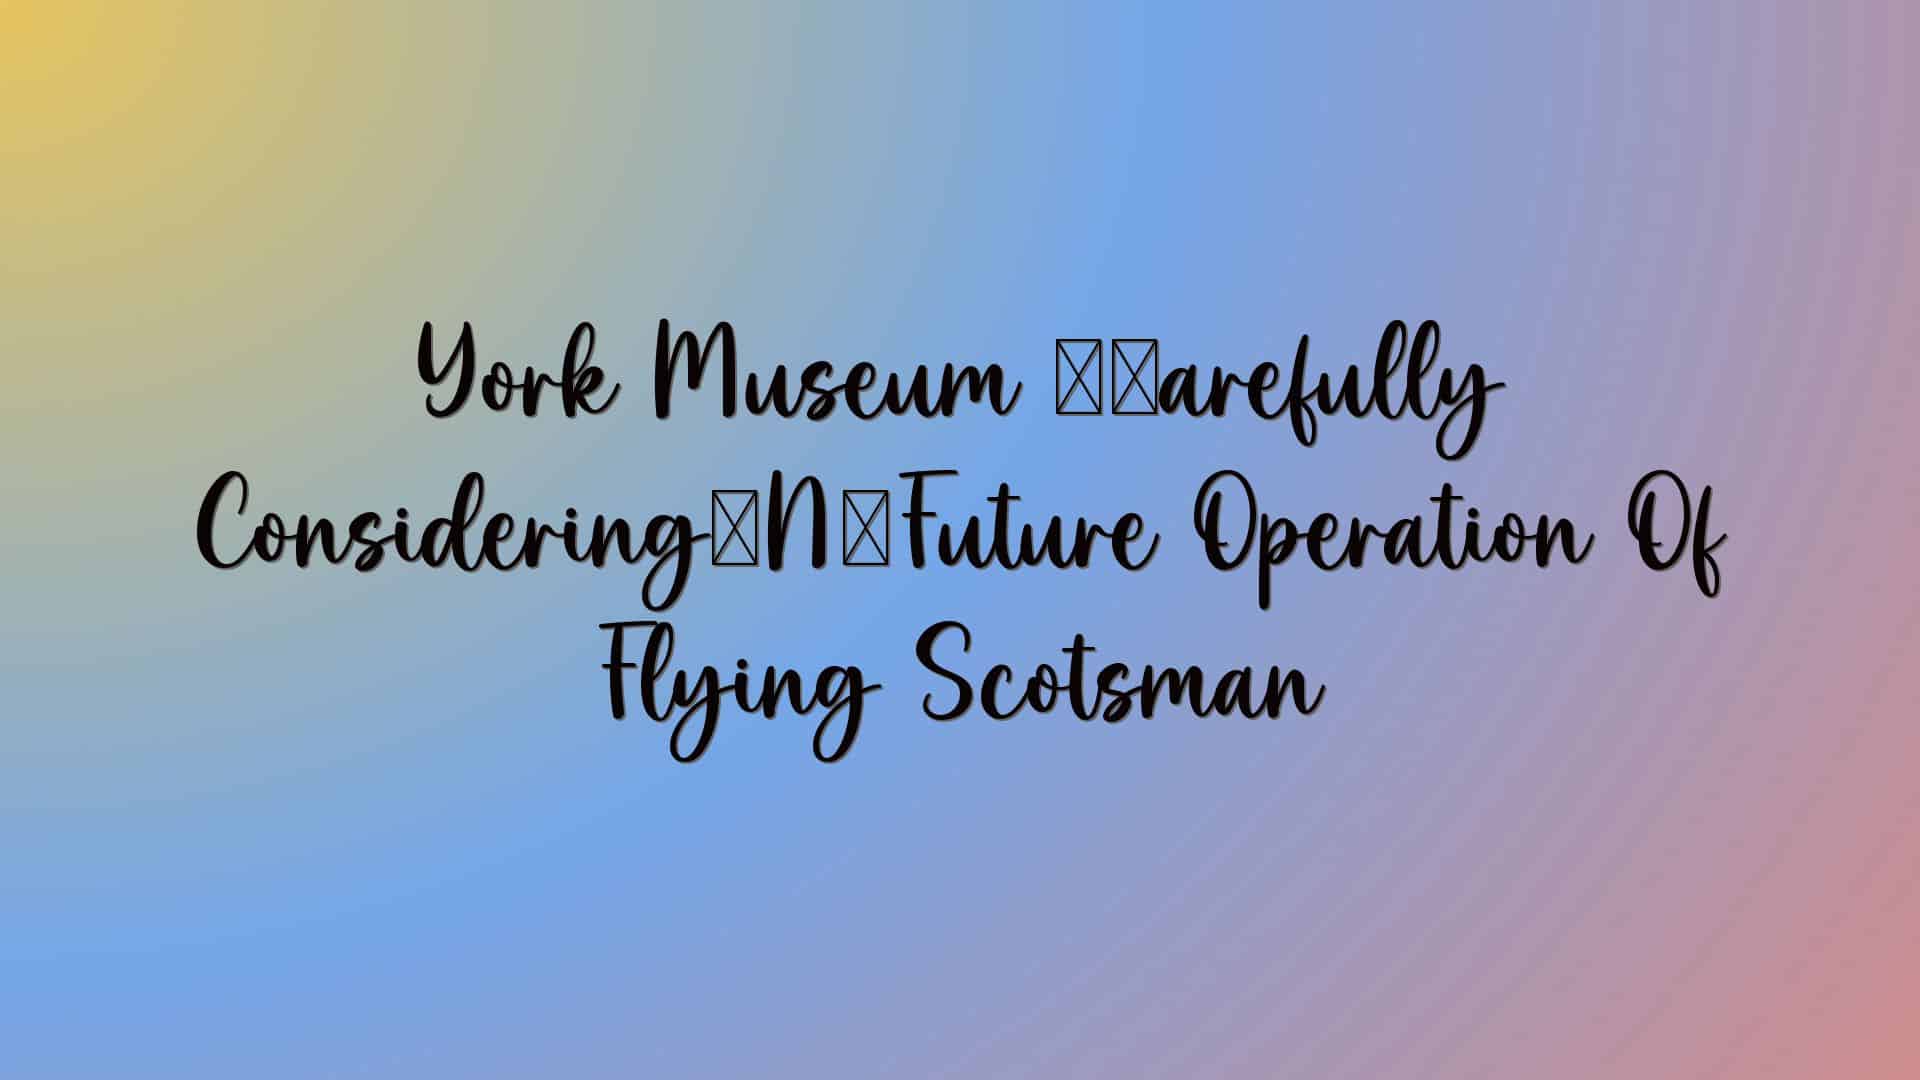 York Museum ‘carefully Considering’ Future Operation Of Flying Scotsman